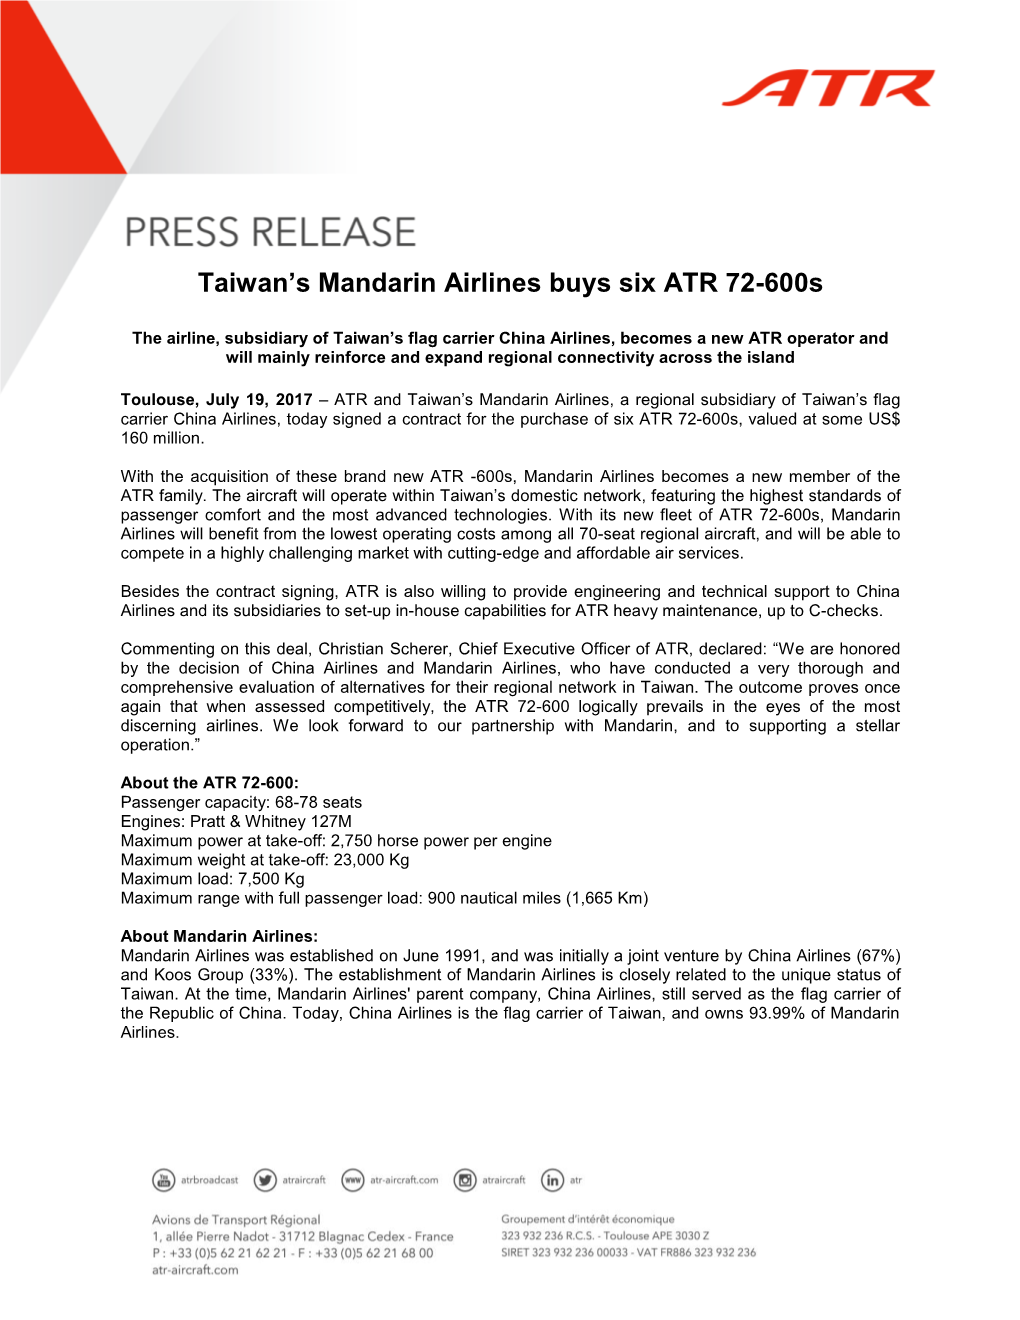 Taiwan's Mandarin Airlines Buys Six ATR 72-600S